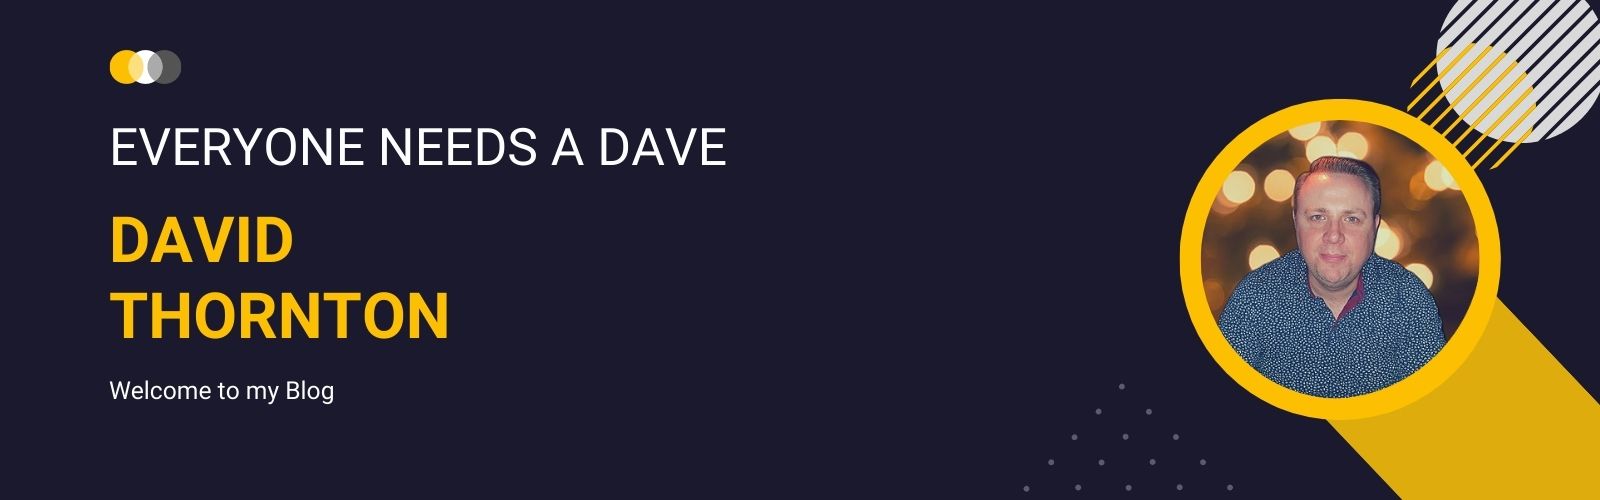 Everyone Needs A Dave Blog